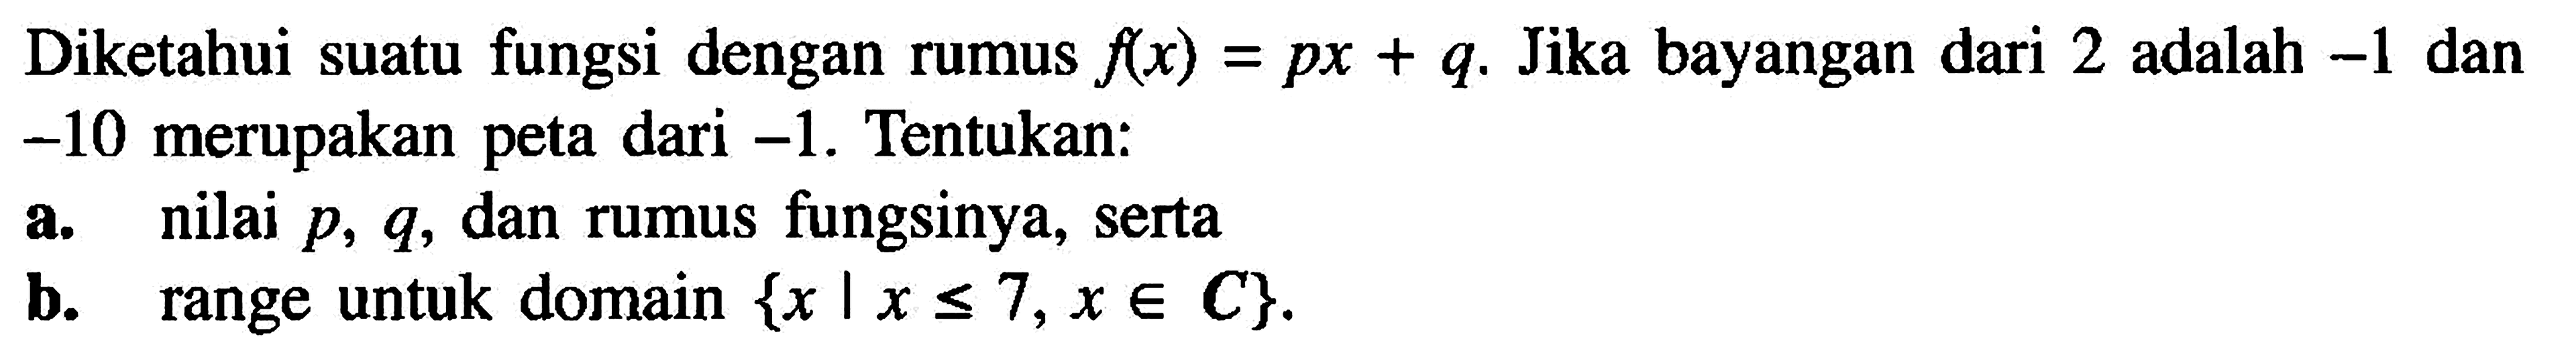 Diketahui suatu fungsi dengan rumus f(x)=px+q. Jika bayangan dari 2 adalah -1 dan -10 merupakan peta dari -1. Tentukan:a. nilai p, q, dan rumus fungsinya, sertab. range untuk domain {x|x<=7,xeC}.